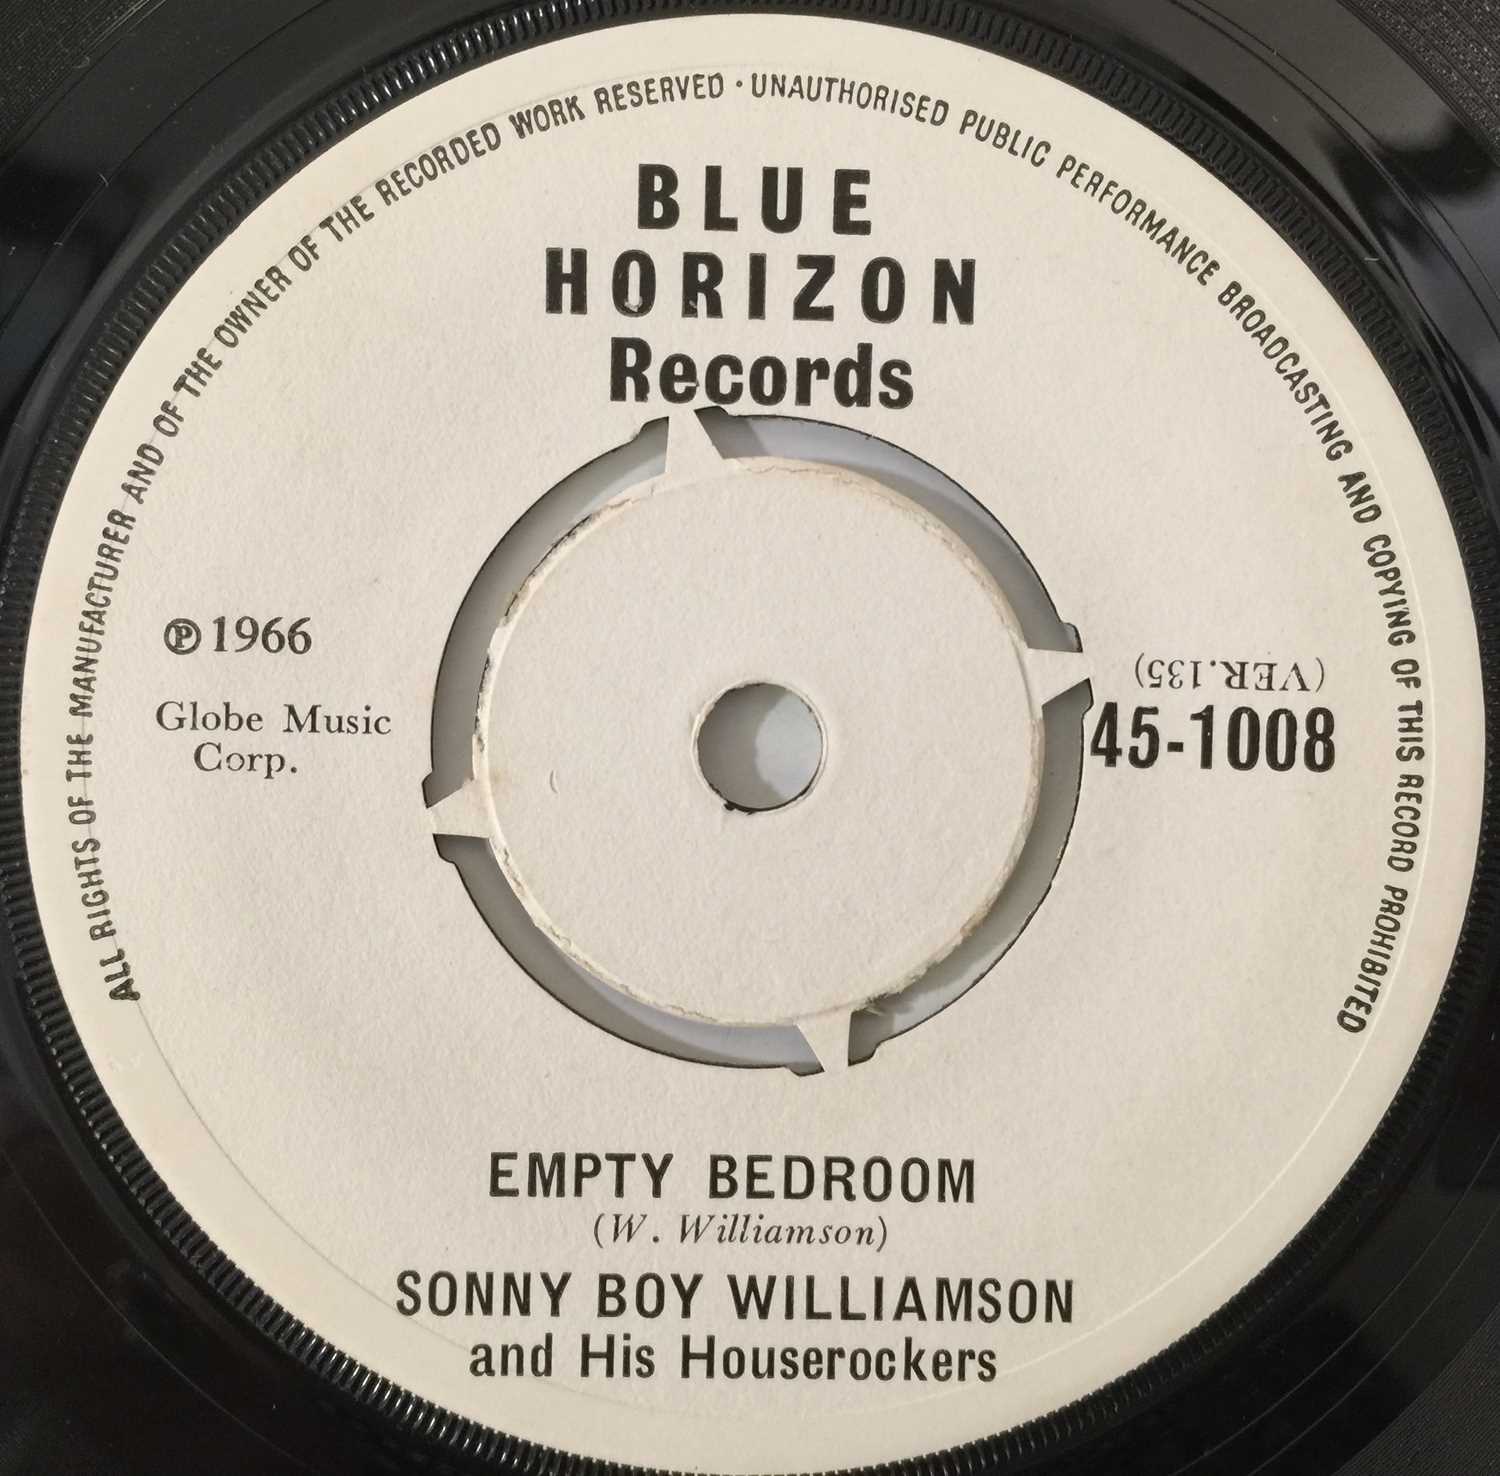 SONNY BOY WILLIAMSON - FROM THE BOTTOM/ EMPTY BEDROOM 7" (BLUE HORIZON - 45-1008) - Image 3 of 3